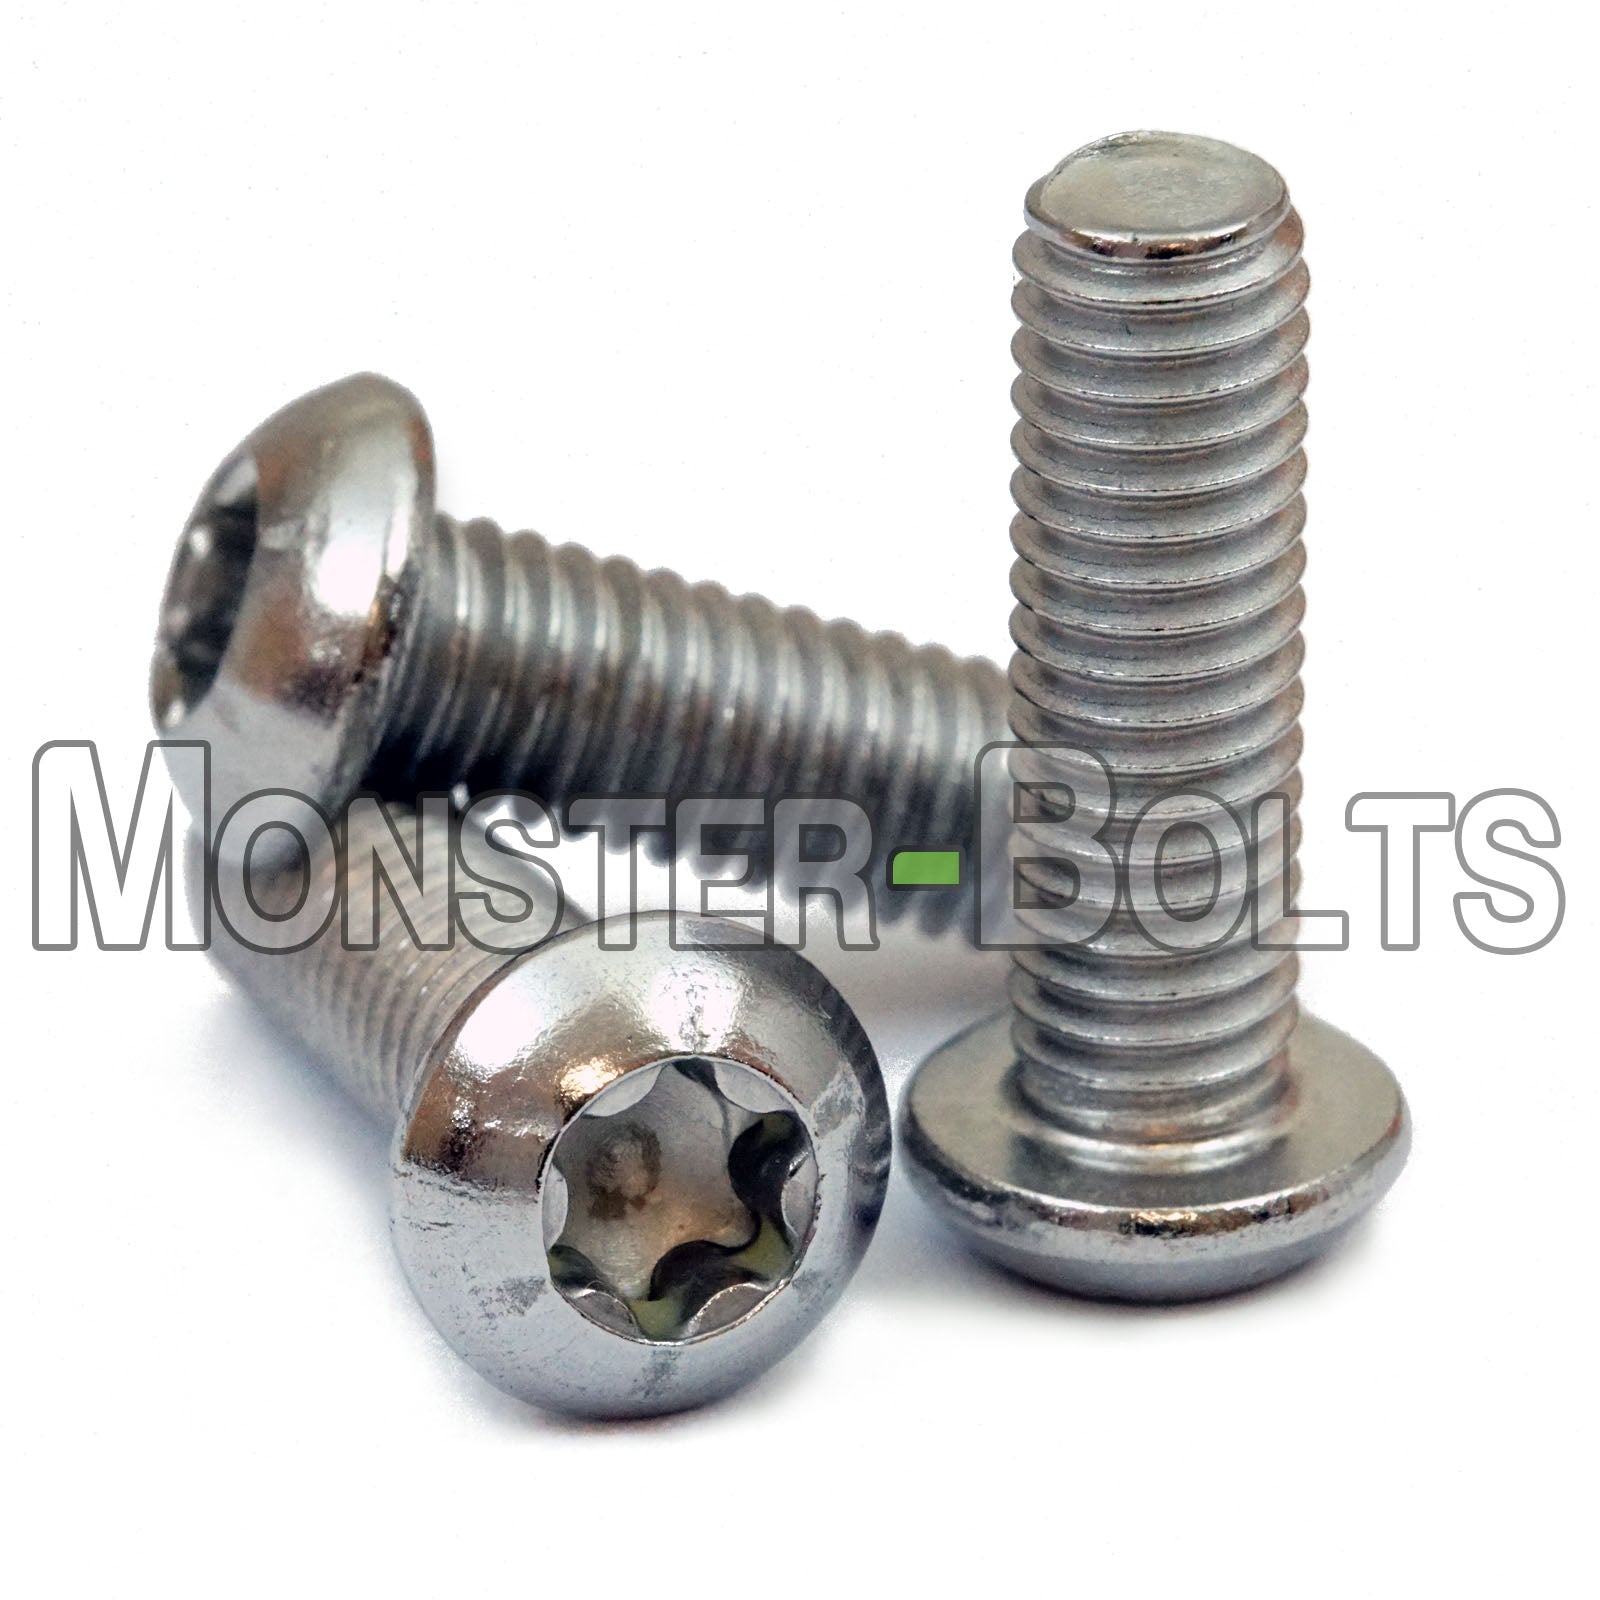 M6 Stainless Steel Button Head Socket Screws, Star / Torx Drive